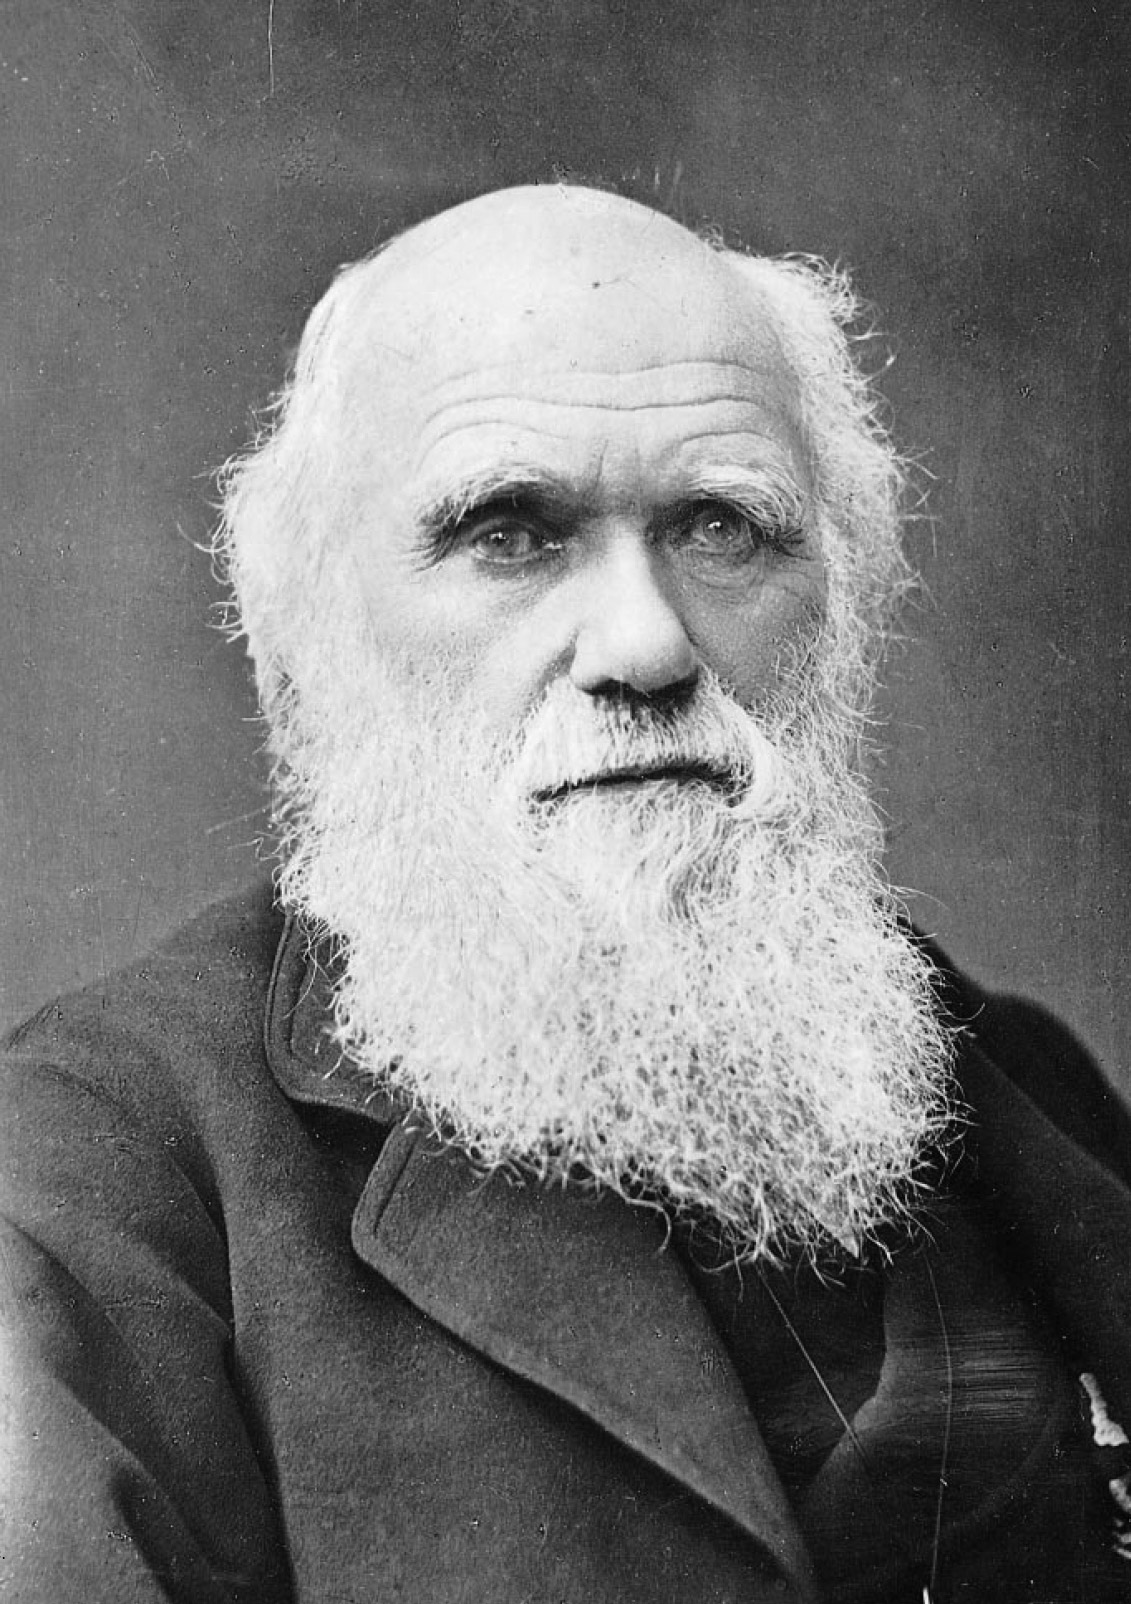 Charles Darwin photograph by Herbert Rose Barraud, 1881.